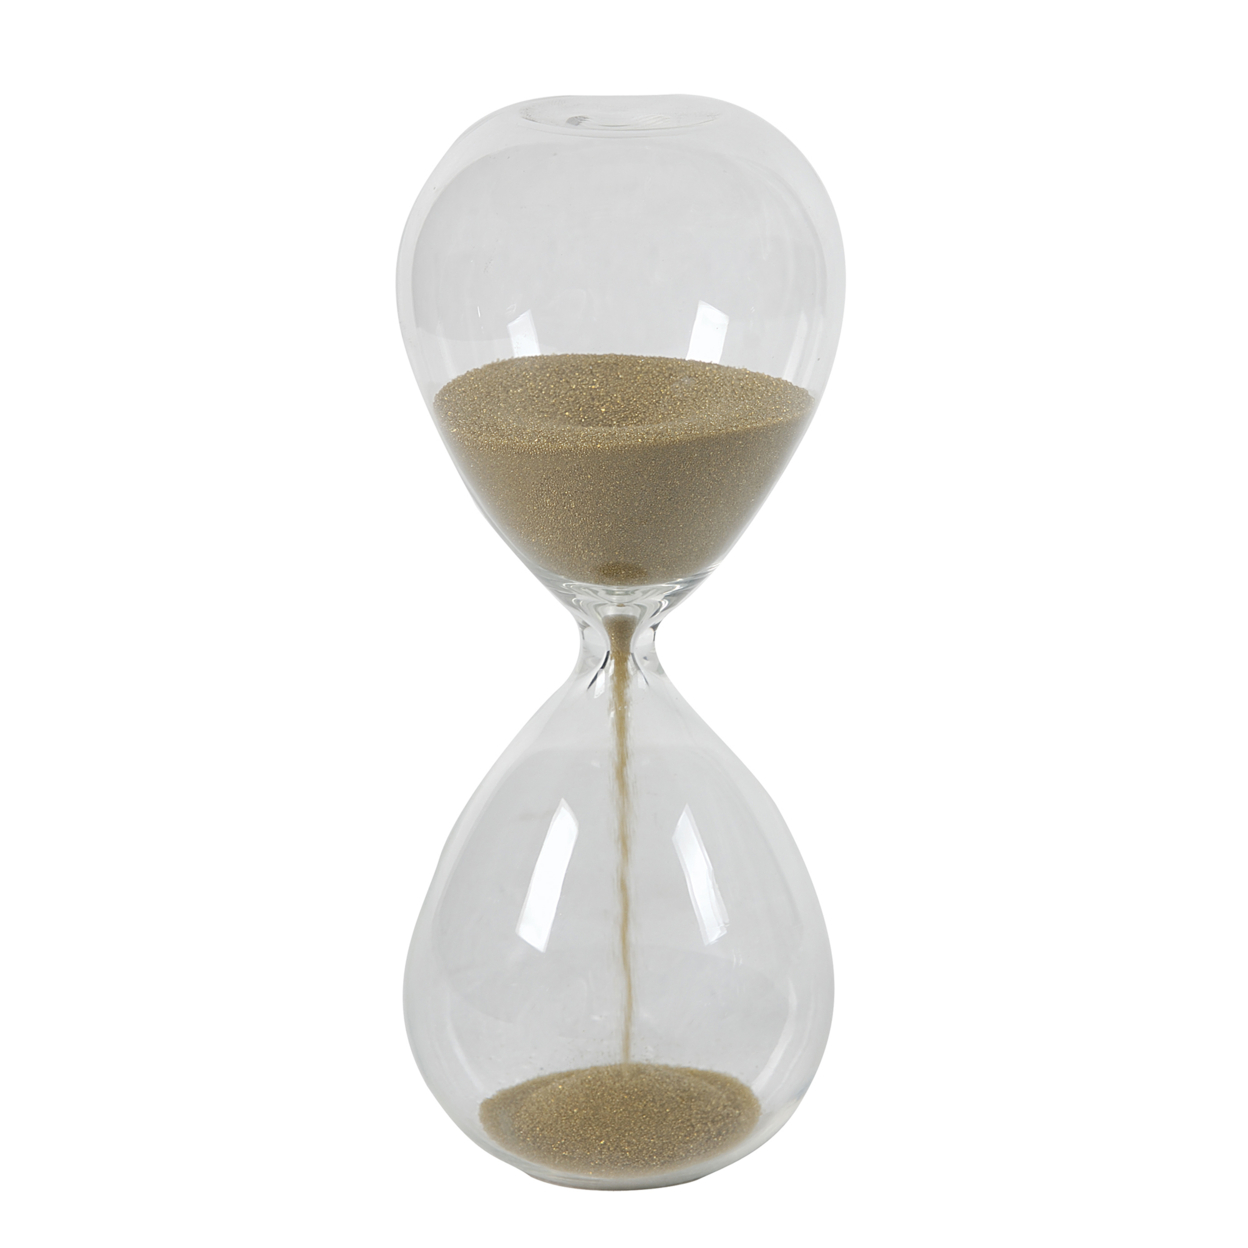 Doug 8 Inch Decorative 1 Minute Hourglass Accent Decor, Taupe Brown Sand- Saltoro Sherpi